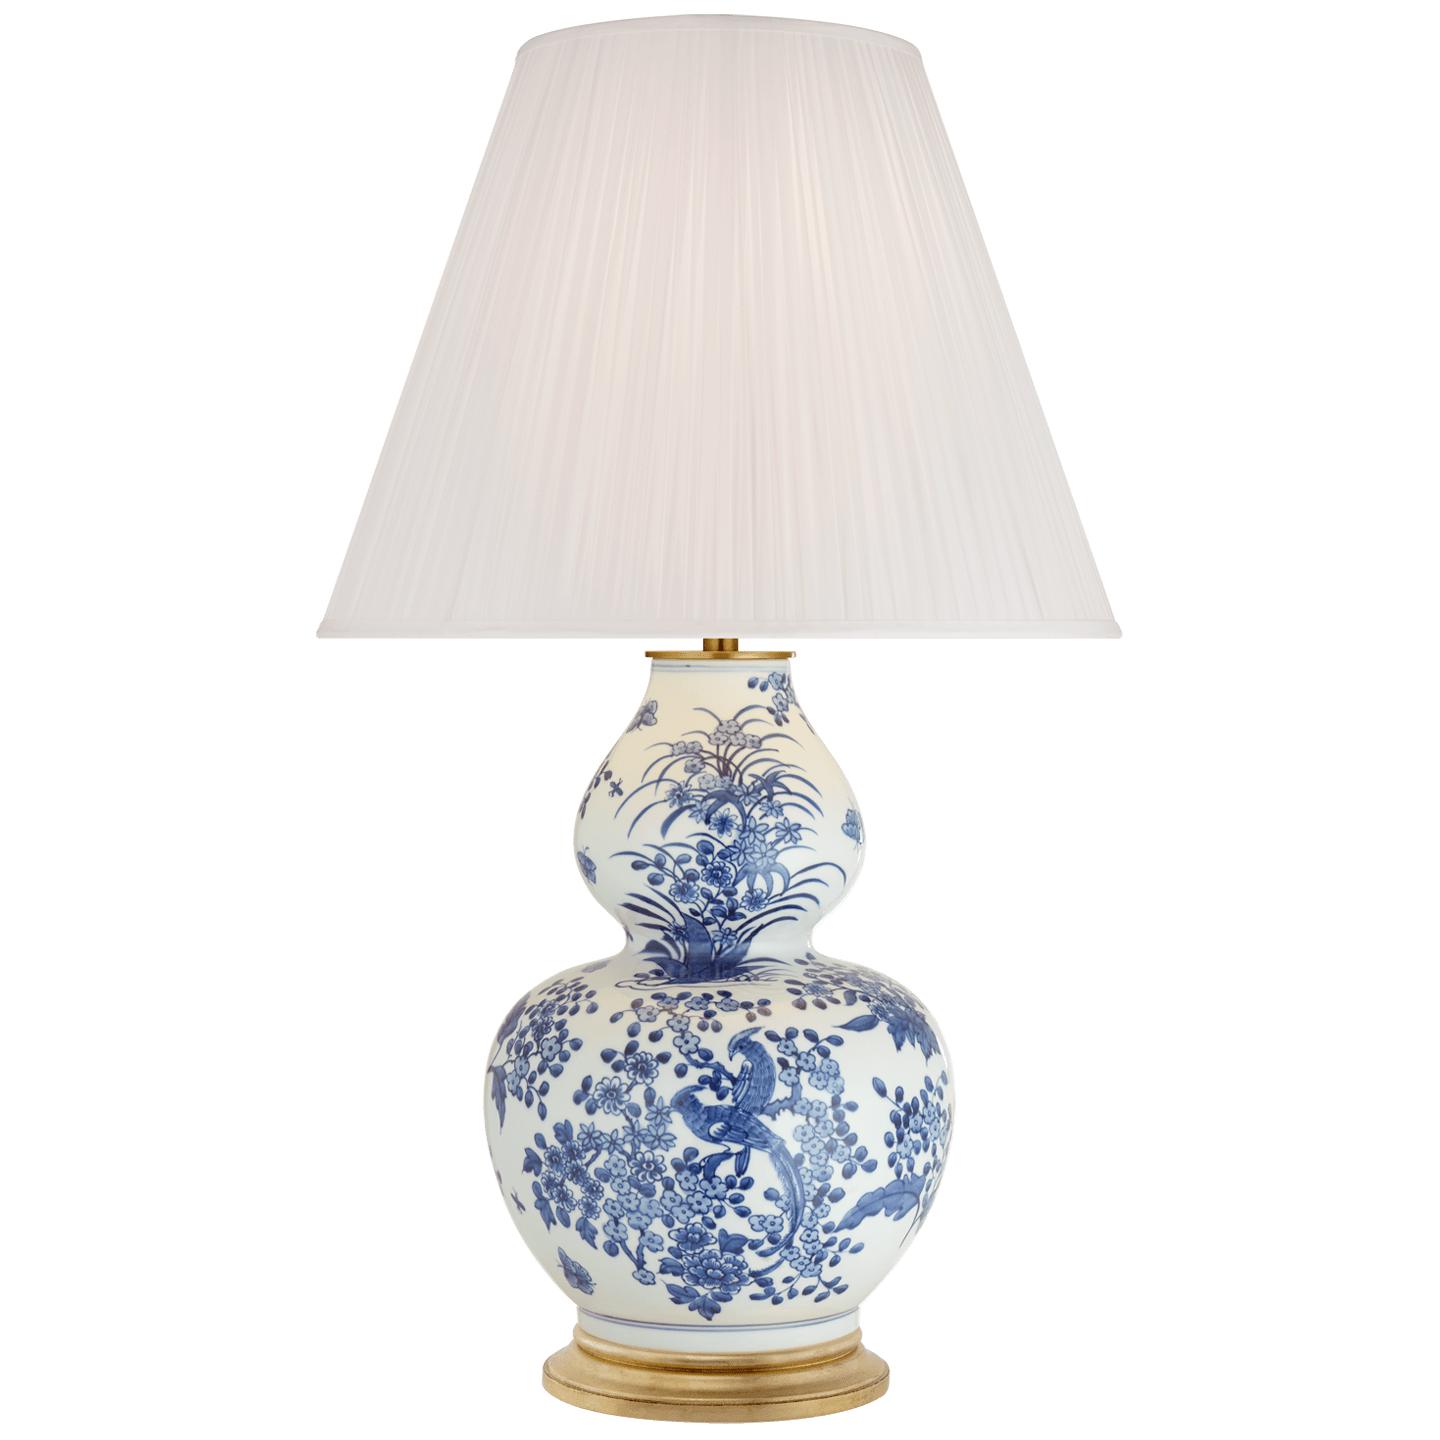 Купить Настольная лампа Sydnee Large Gourd Table Lamp в интернет-магазине roooms.ru